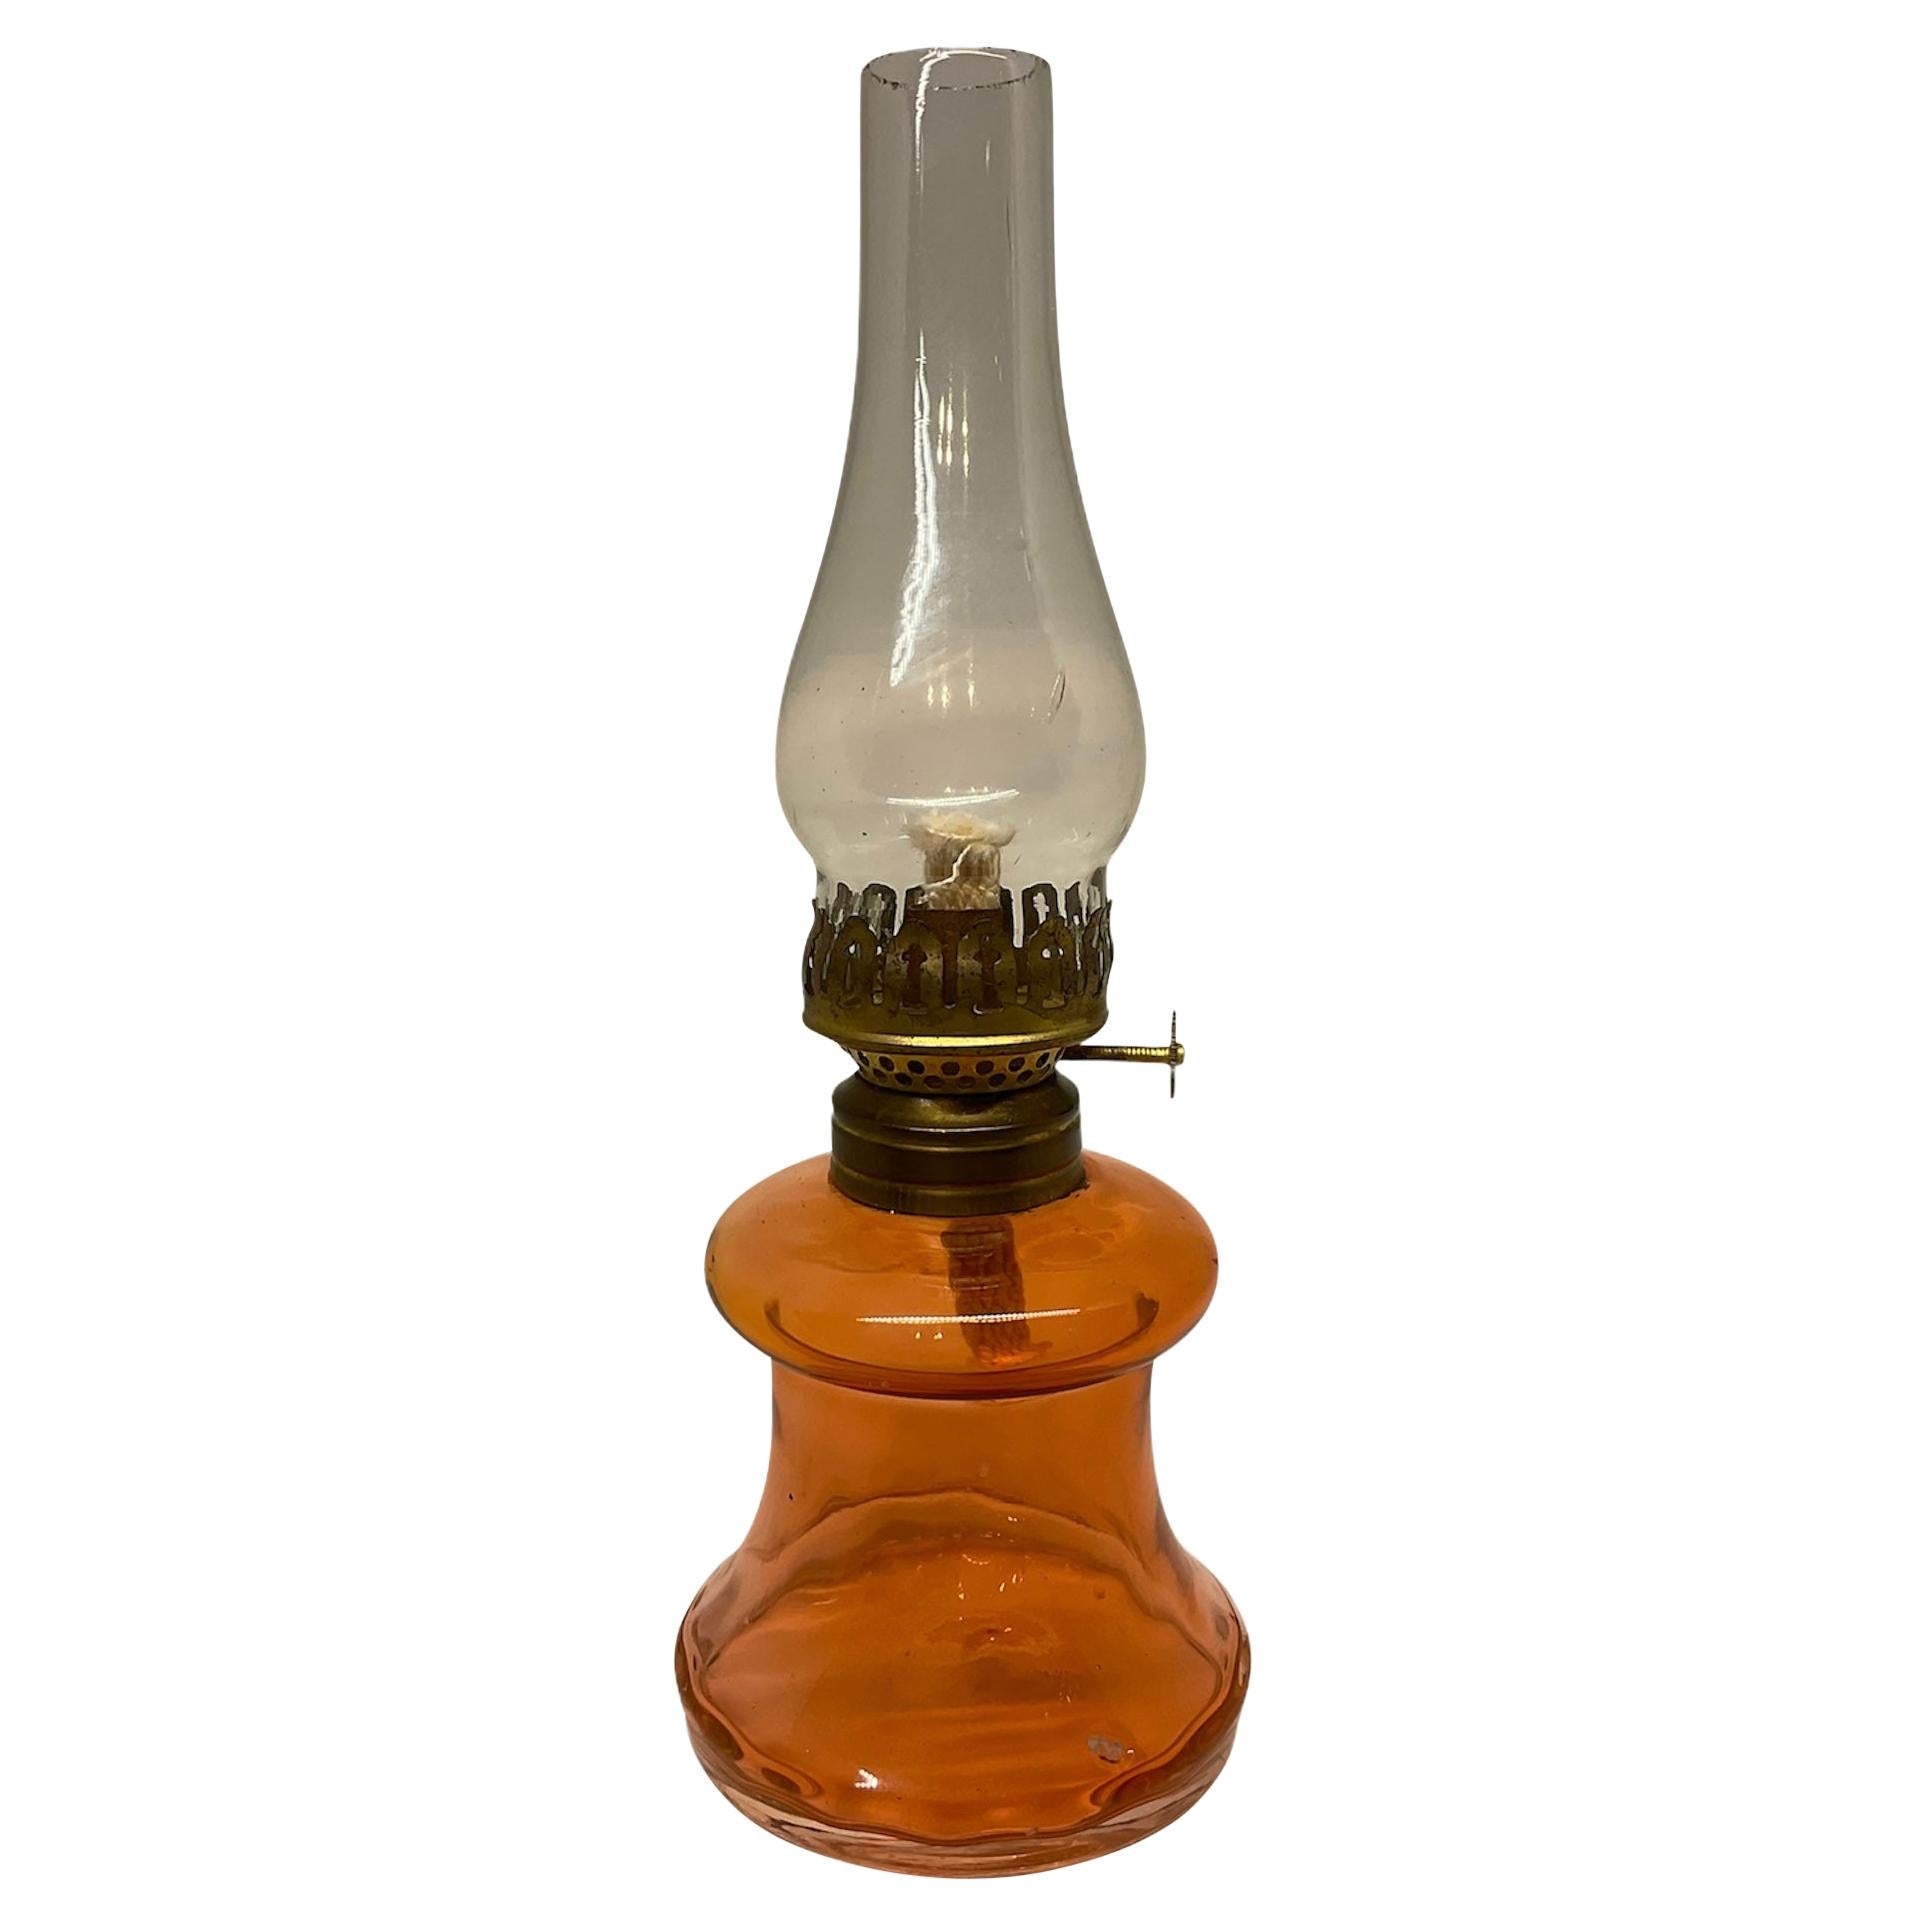 P&A Hornet Miniature Hurricane Oil Glass Lamp